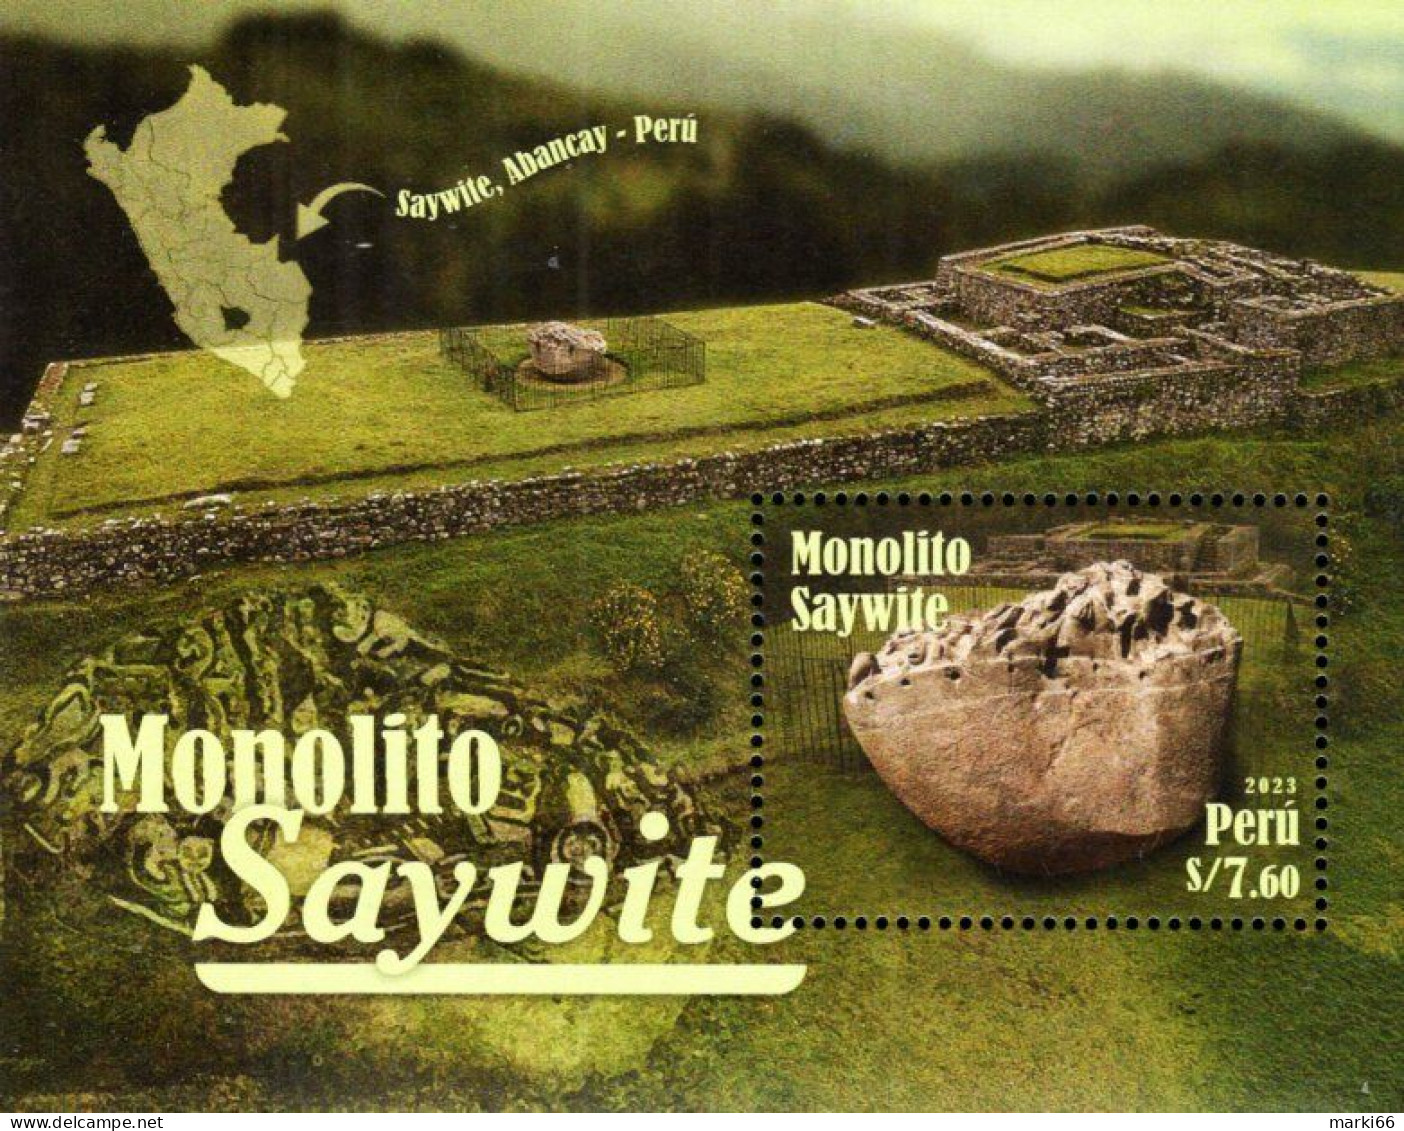 Peru - 2023 - Saywite (Sayhuite) Monolith - Inca Religious Worship Site - Mint Souvenir Sheet - Perù